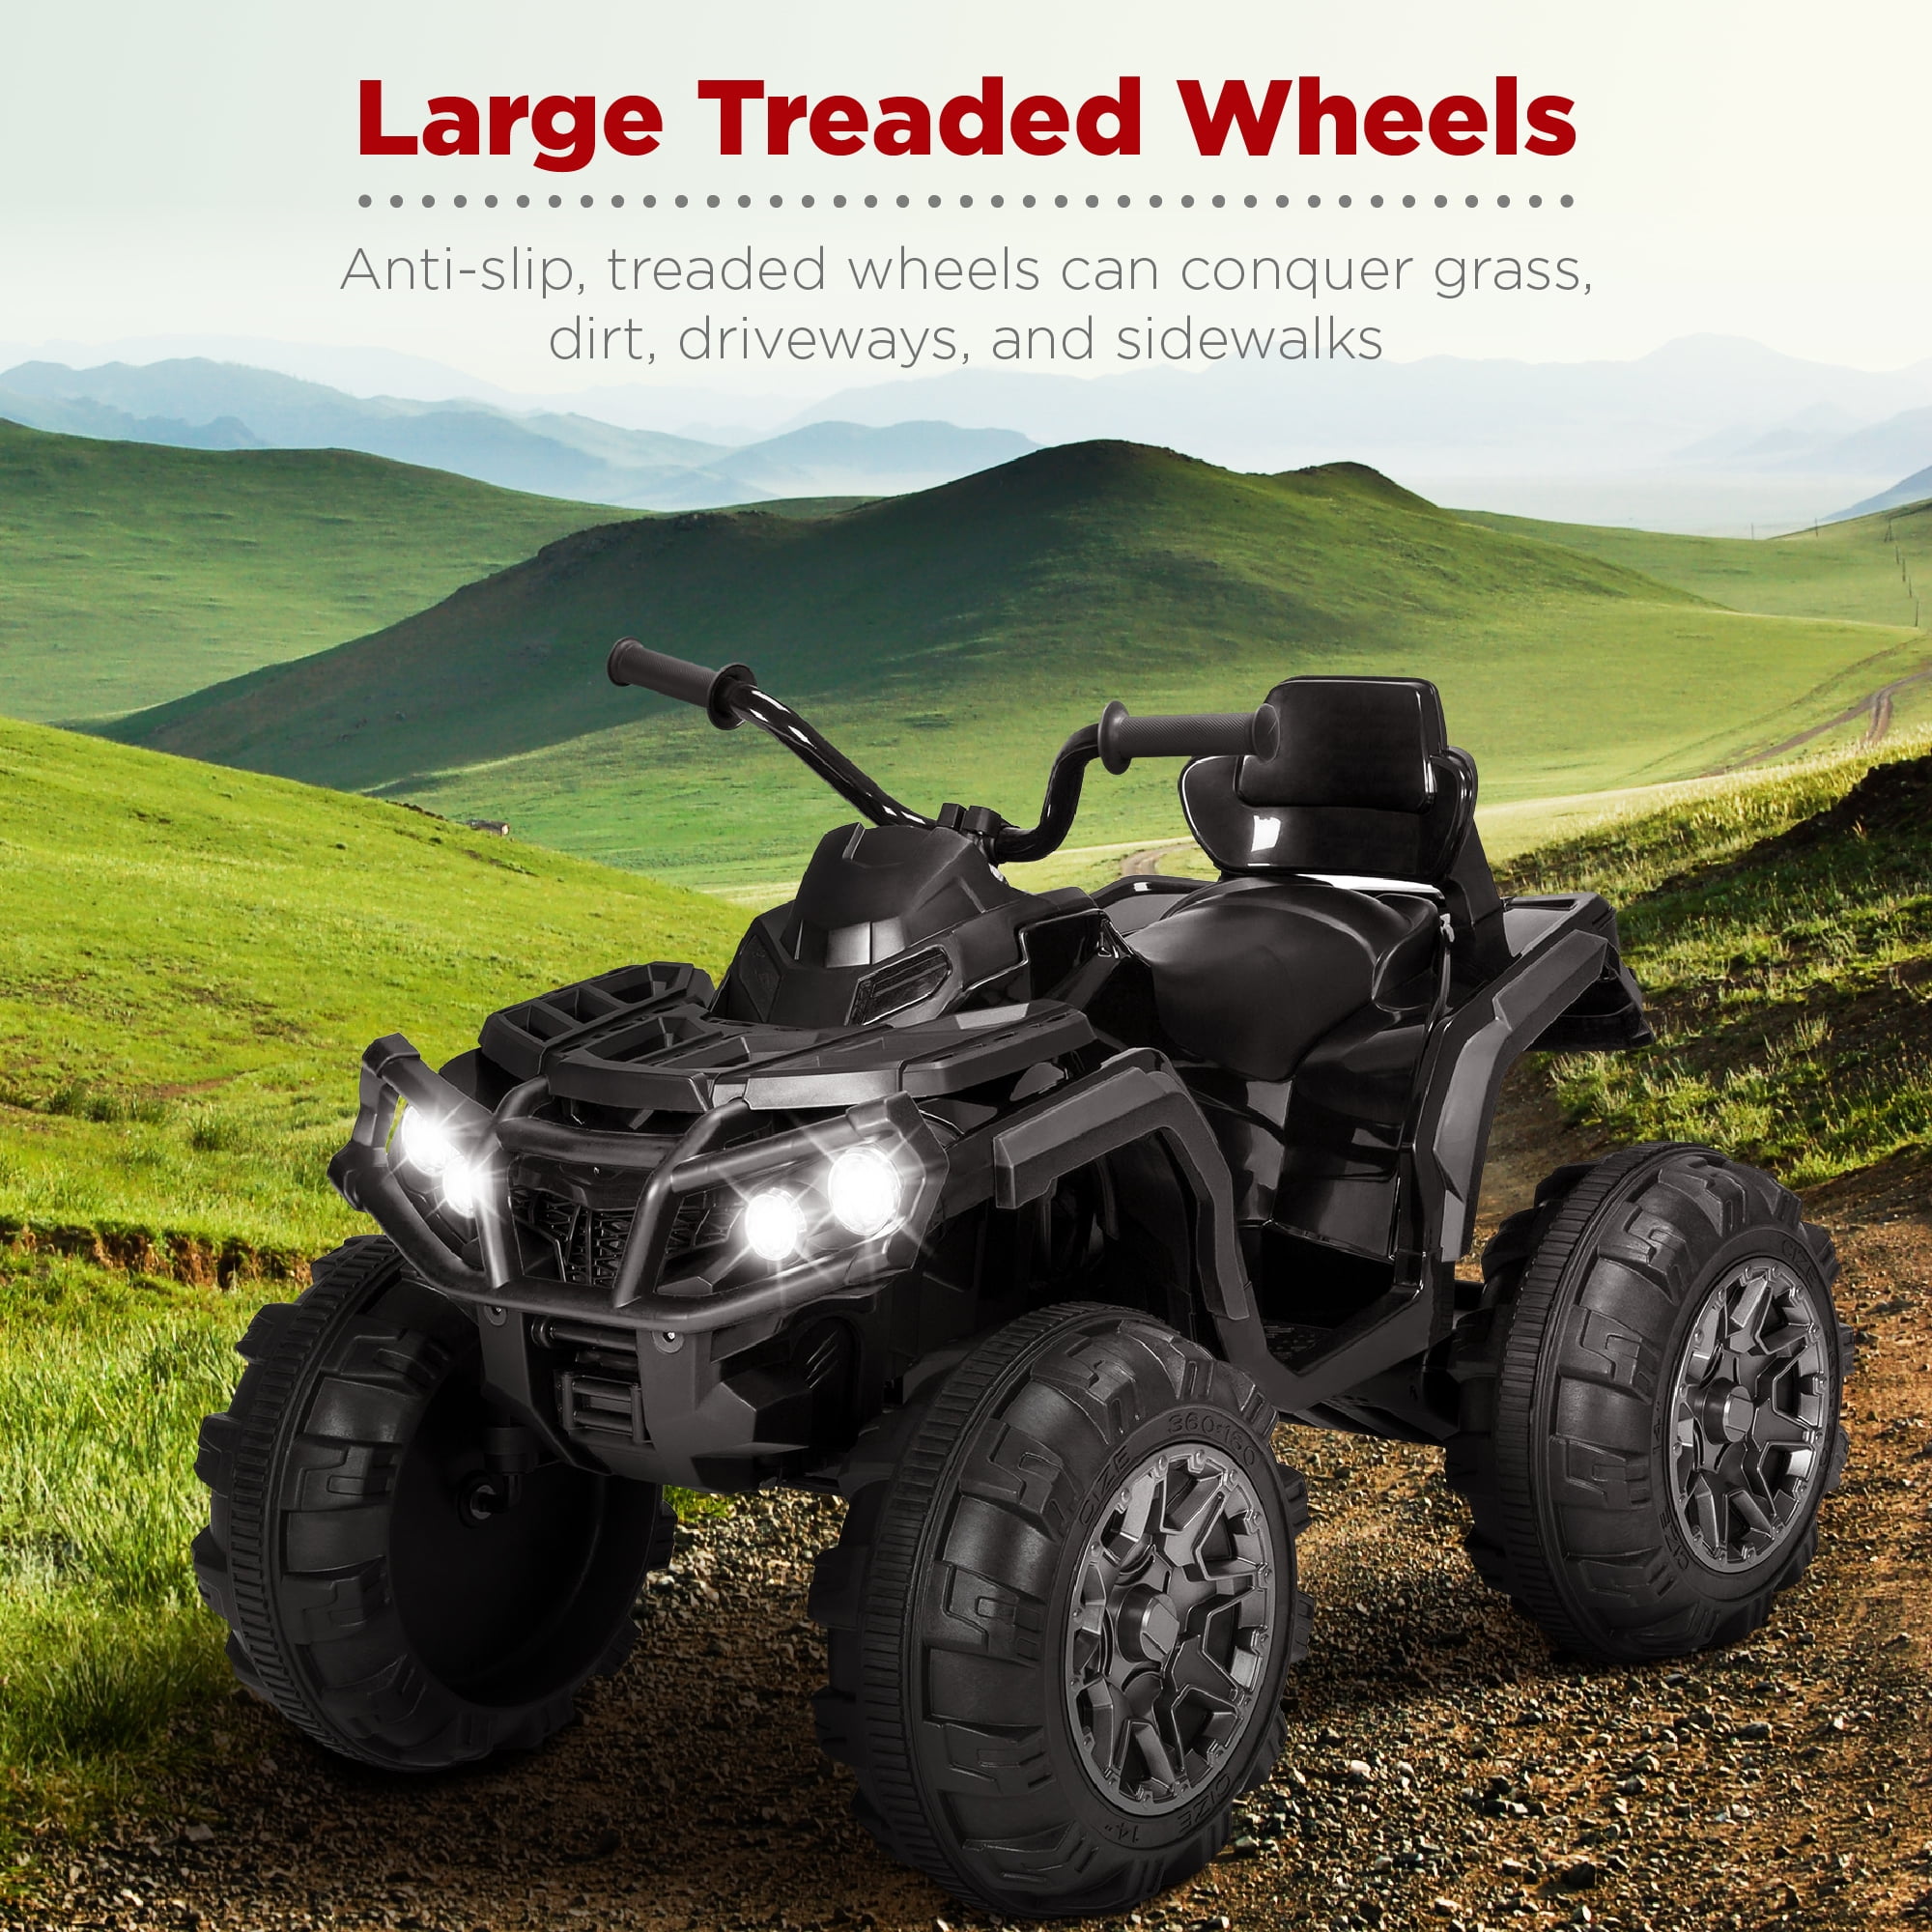 Best Choice Products 12V Kids Ride-On ATV Quad w/ Bluetooth, 3.7mph Max, Treaded Tires, LED Lights, Radio - Black - 1